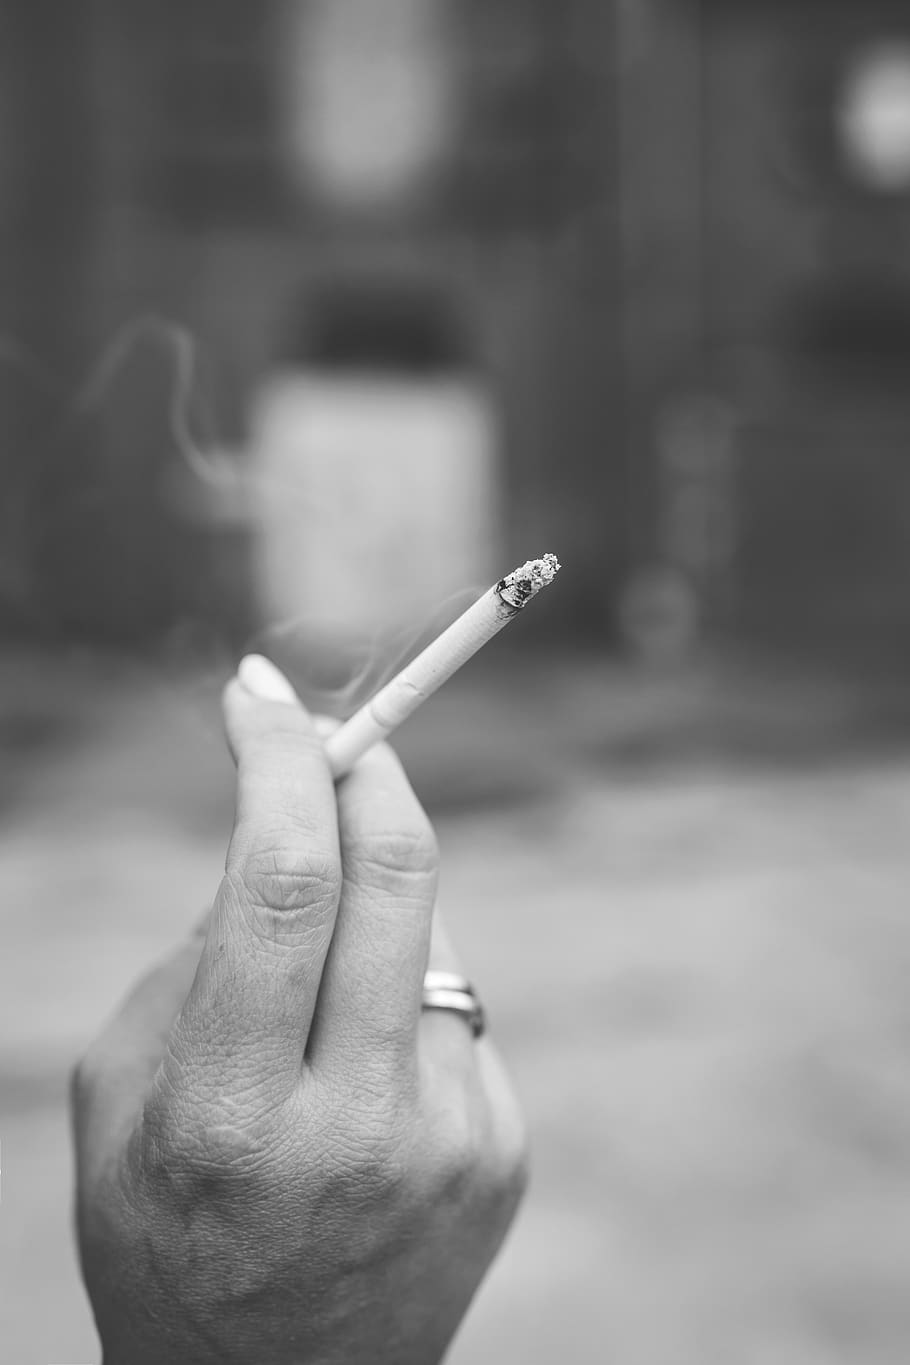 blur, cigar, cigarette, fingers, focus, hand, monochrome, ring, smoke, smoking